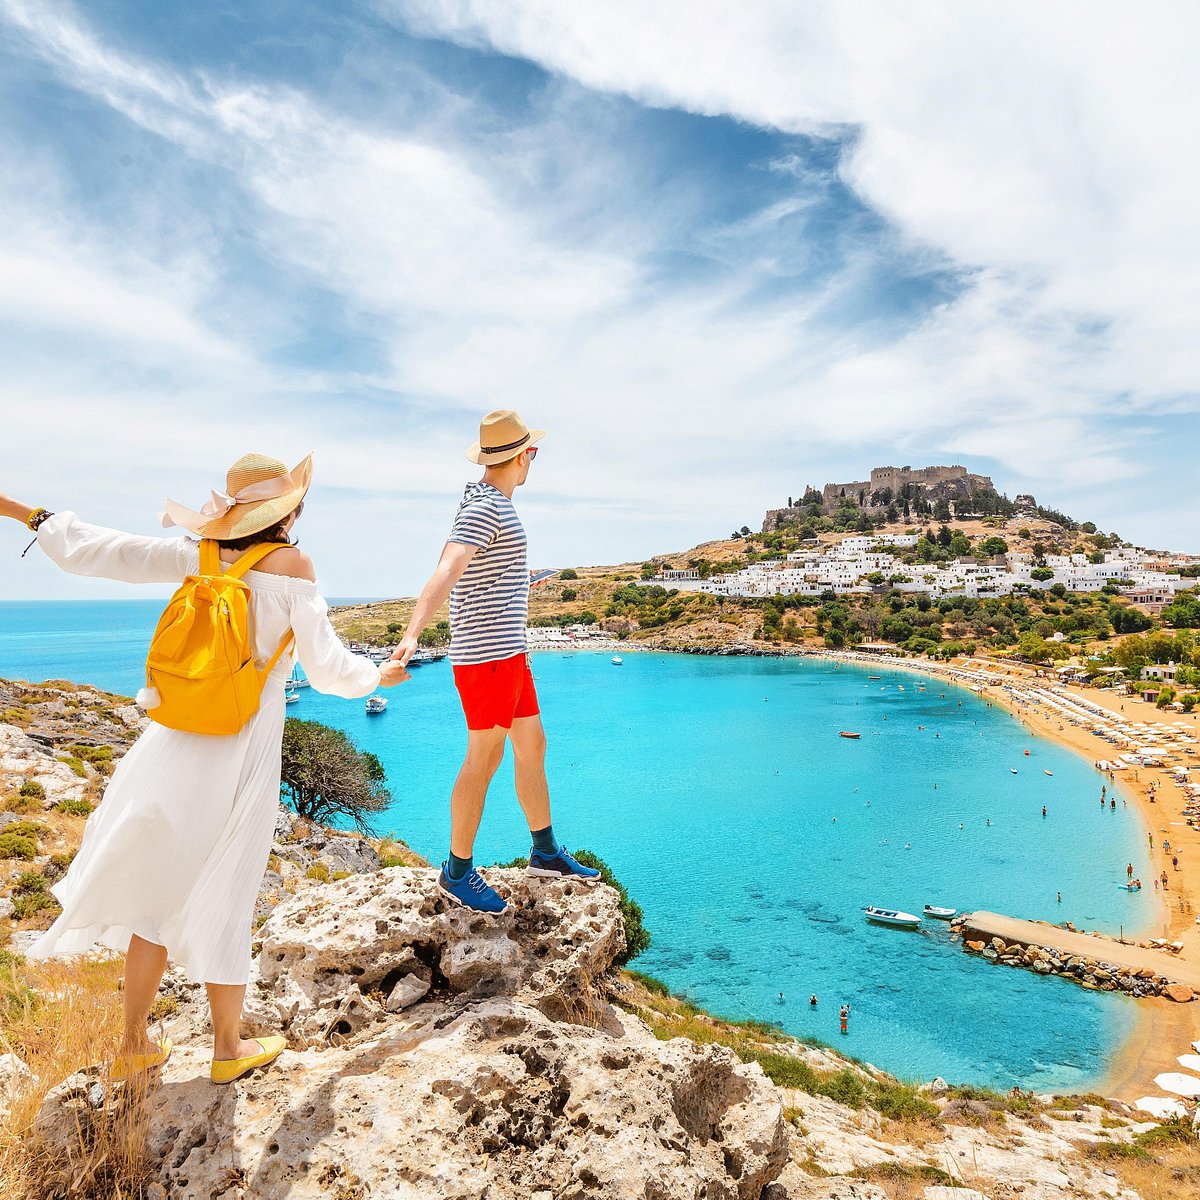 Дари незабываемое. Греция туризм. Незабываемое впечатление. Греция 2021. Туристы в Греции.